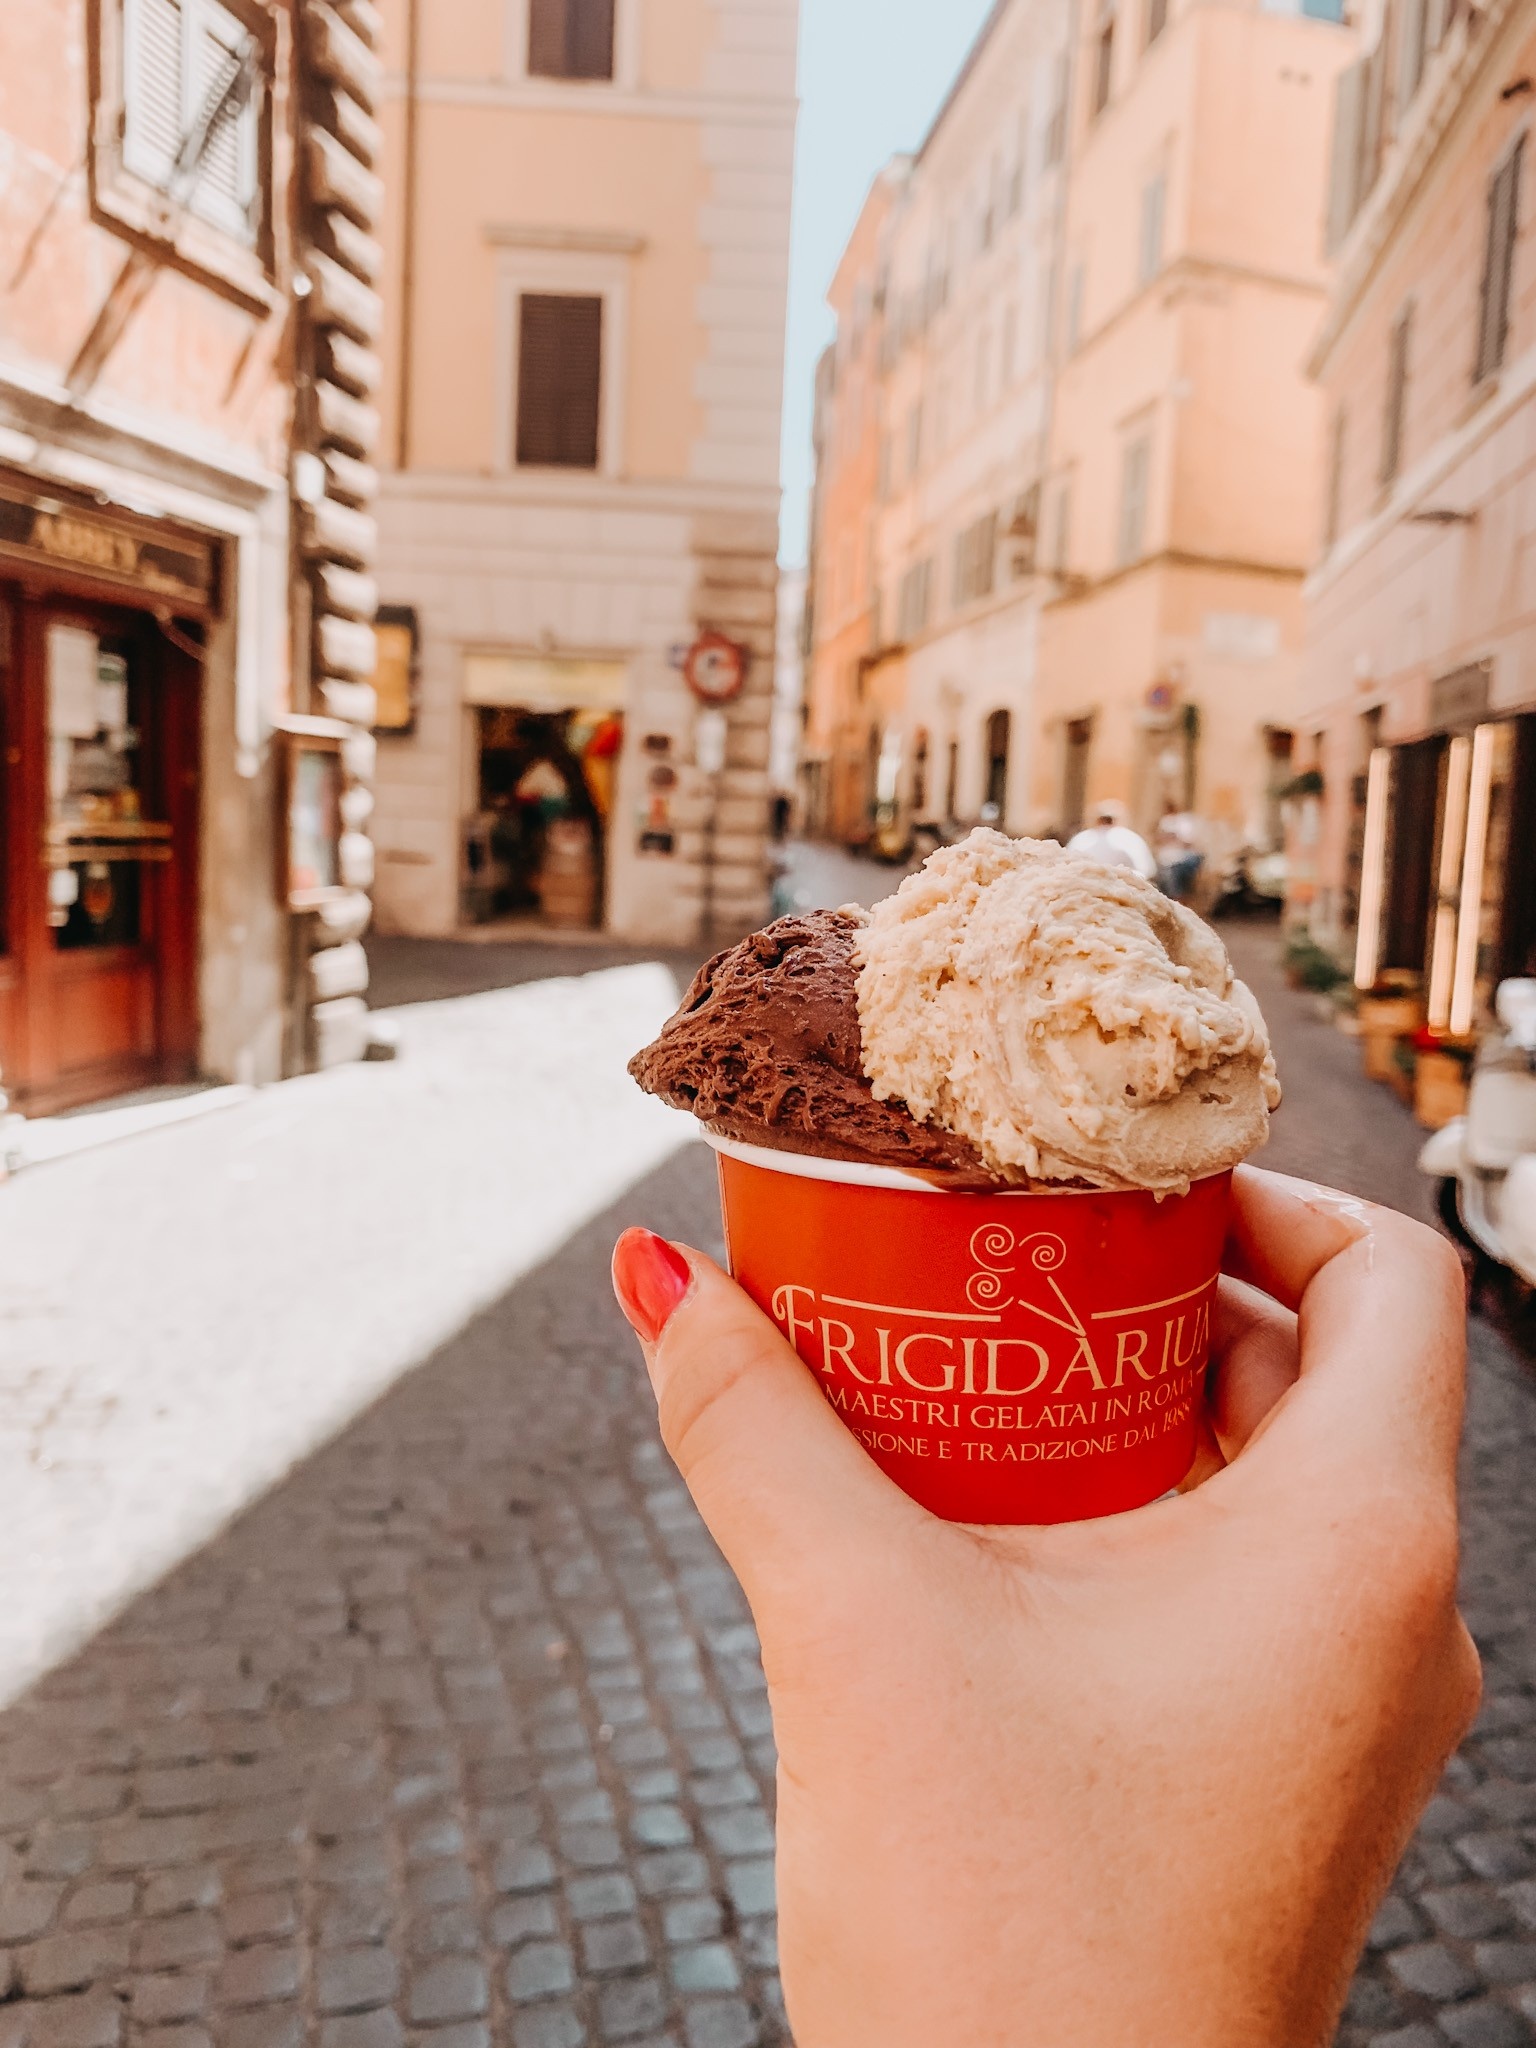 Gelato: An Italian variant of ice cream, A summer dessert. 1540x2050 HD Wallpaper.